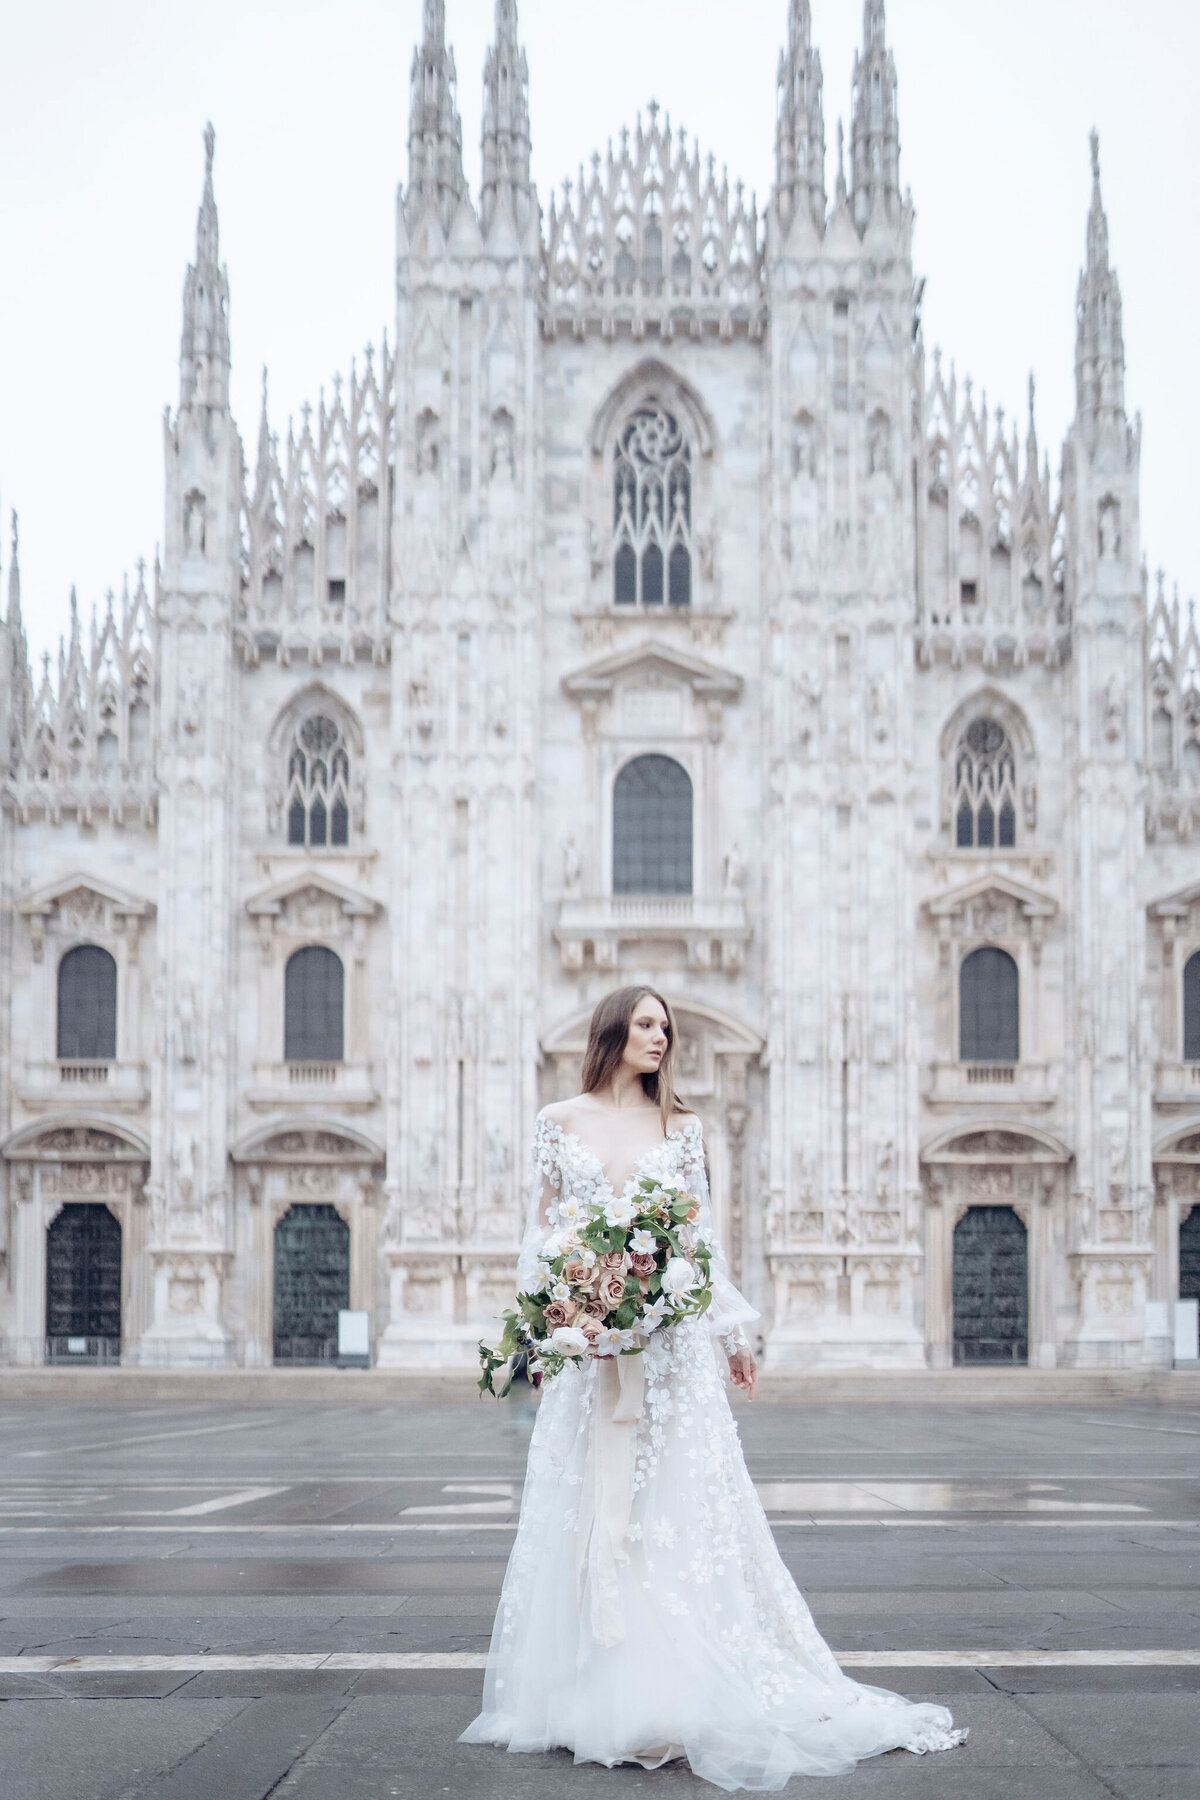 024-Milan-Duomo-Inspiration-Love-Story Elopement-Cinematic-Romance-Destination-Wedding-Editorial-Luxury-Fine-Art-Lisa-Vigliotta-Photography